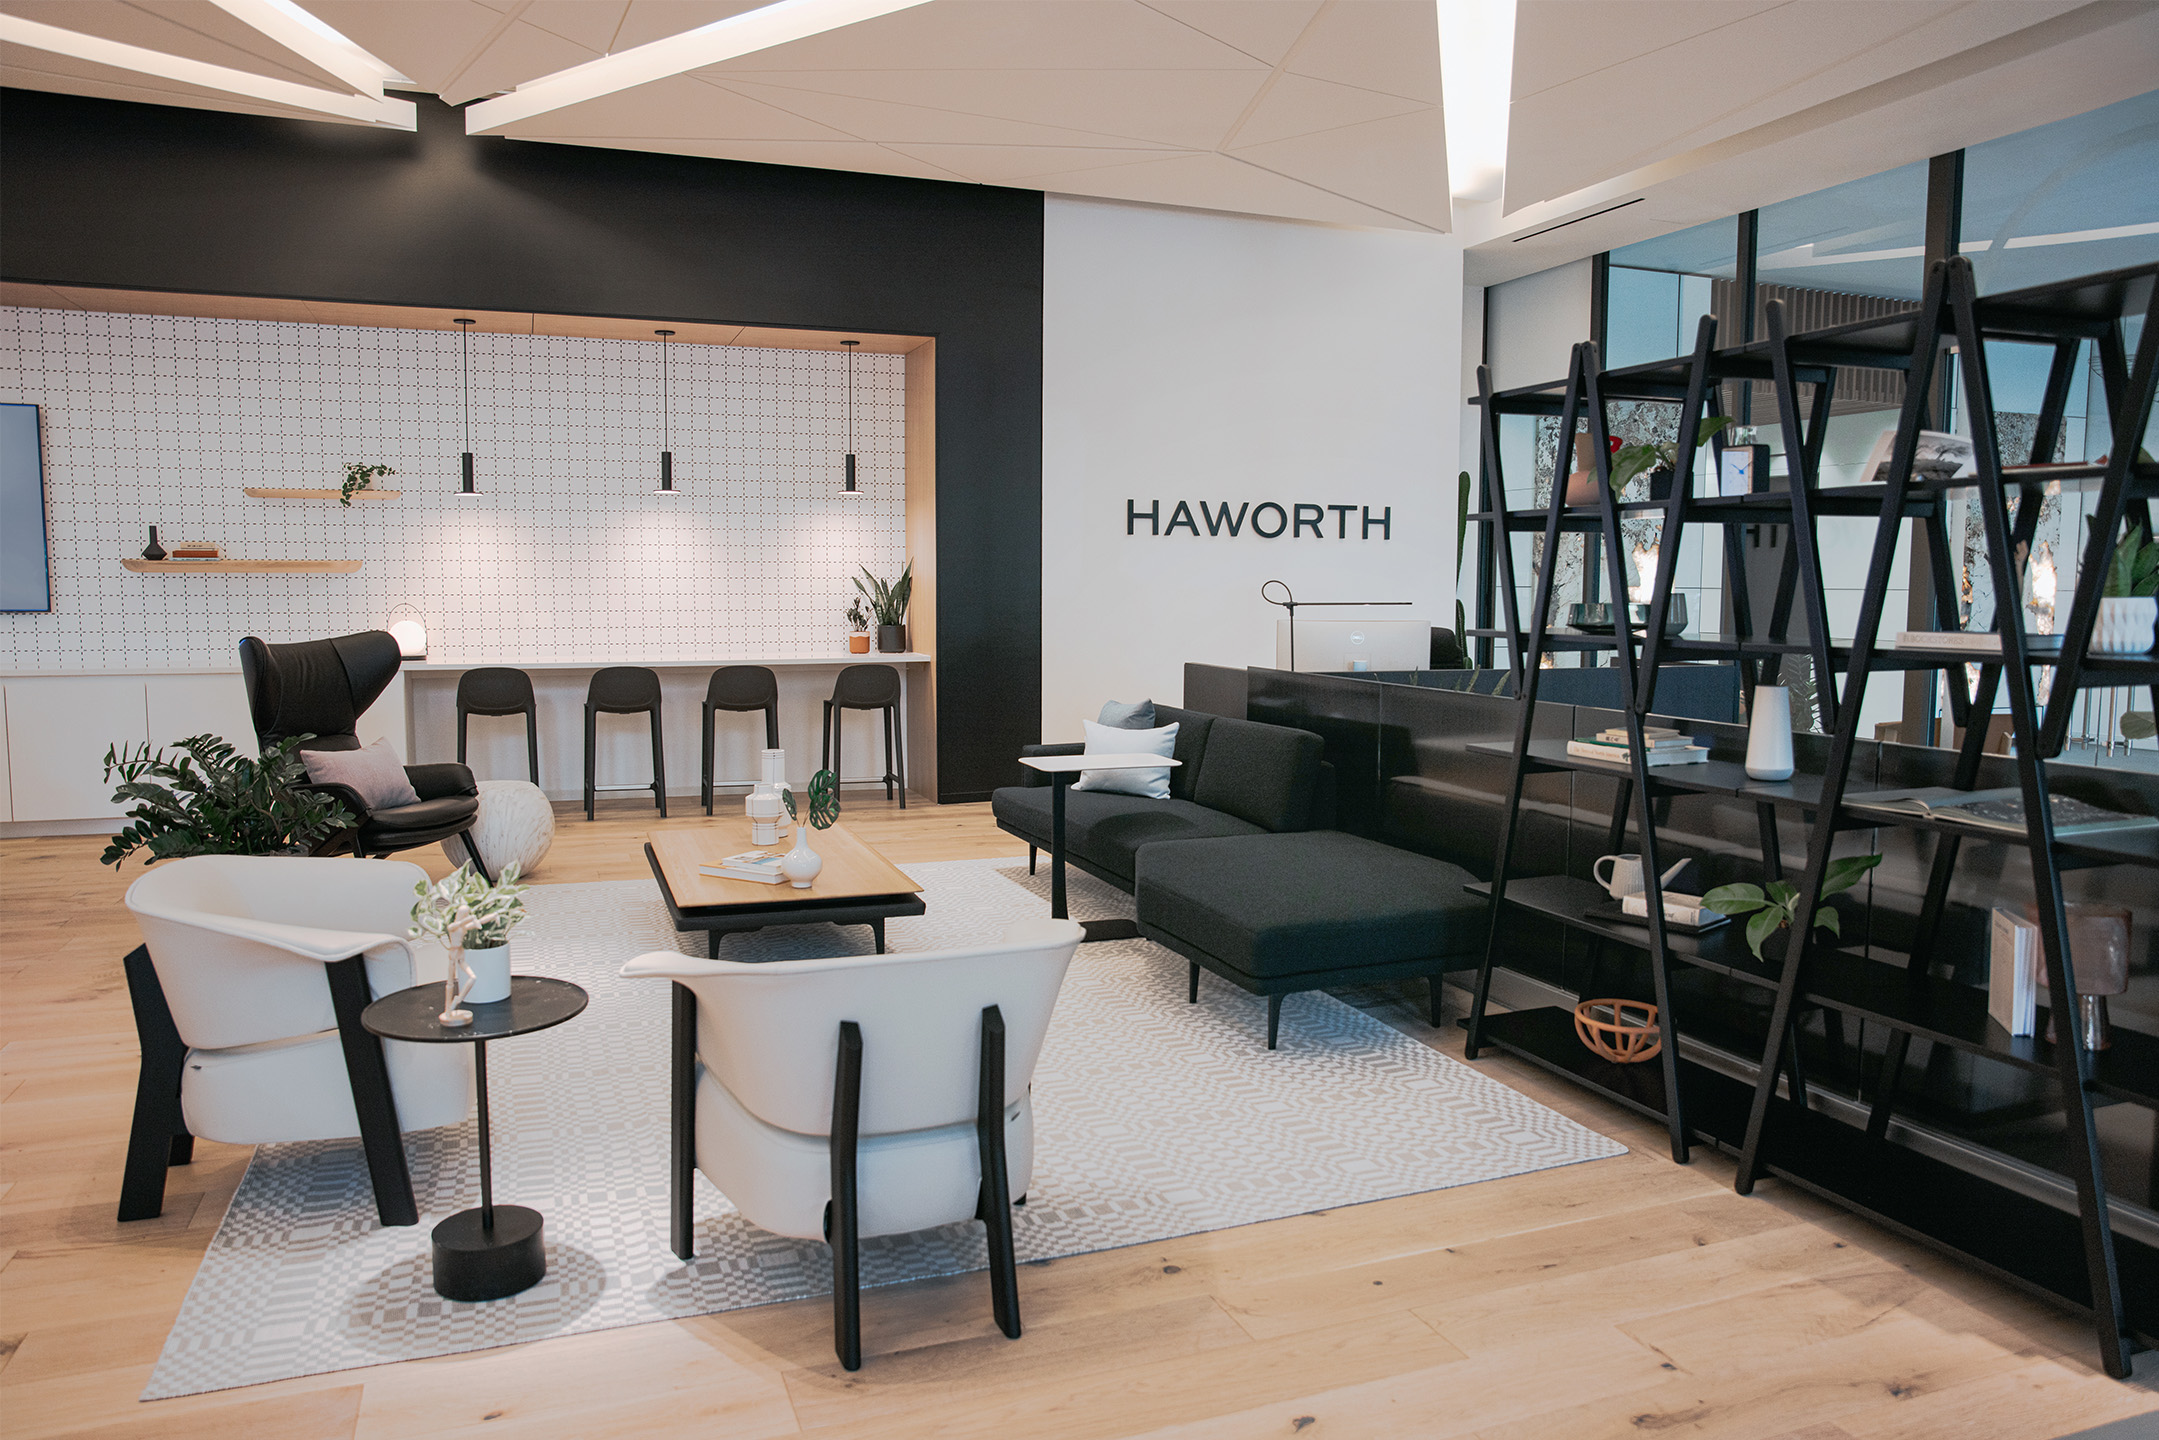 Haworth Houston Showroom Entry & Café Lounge